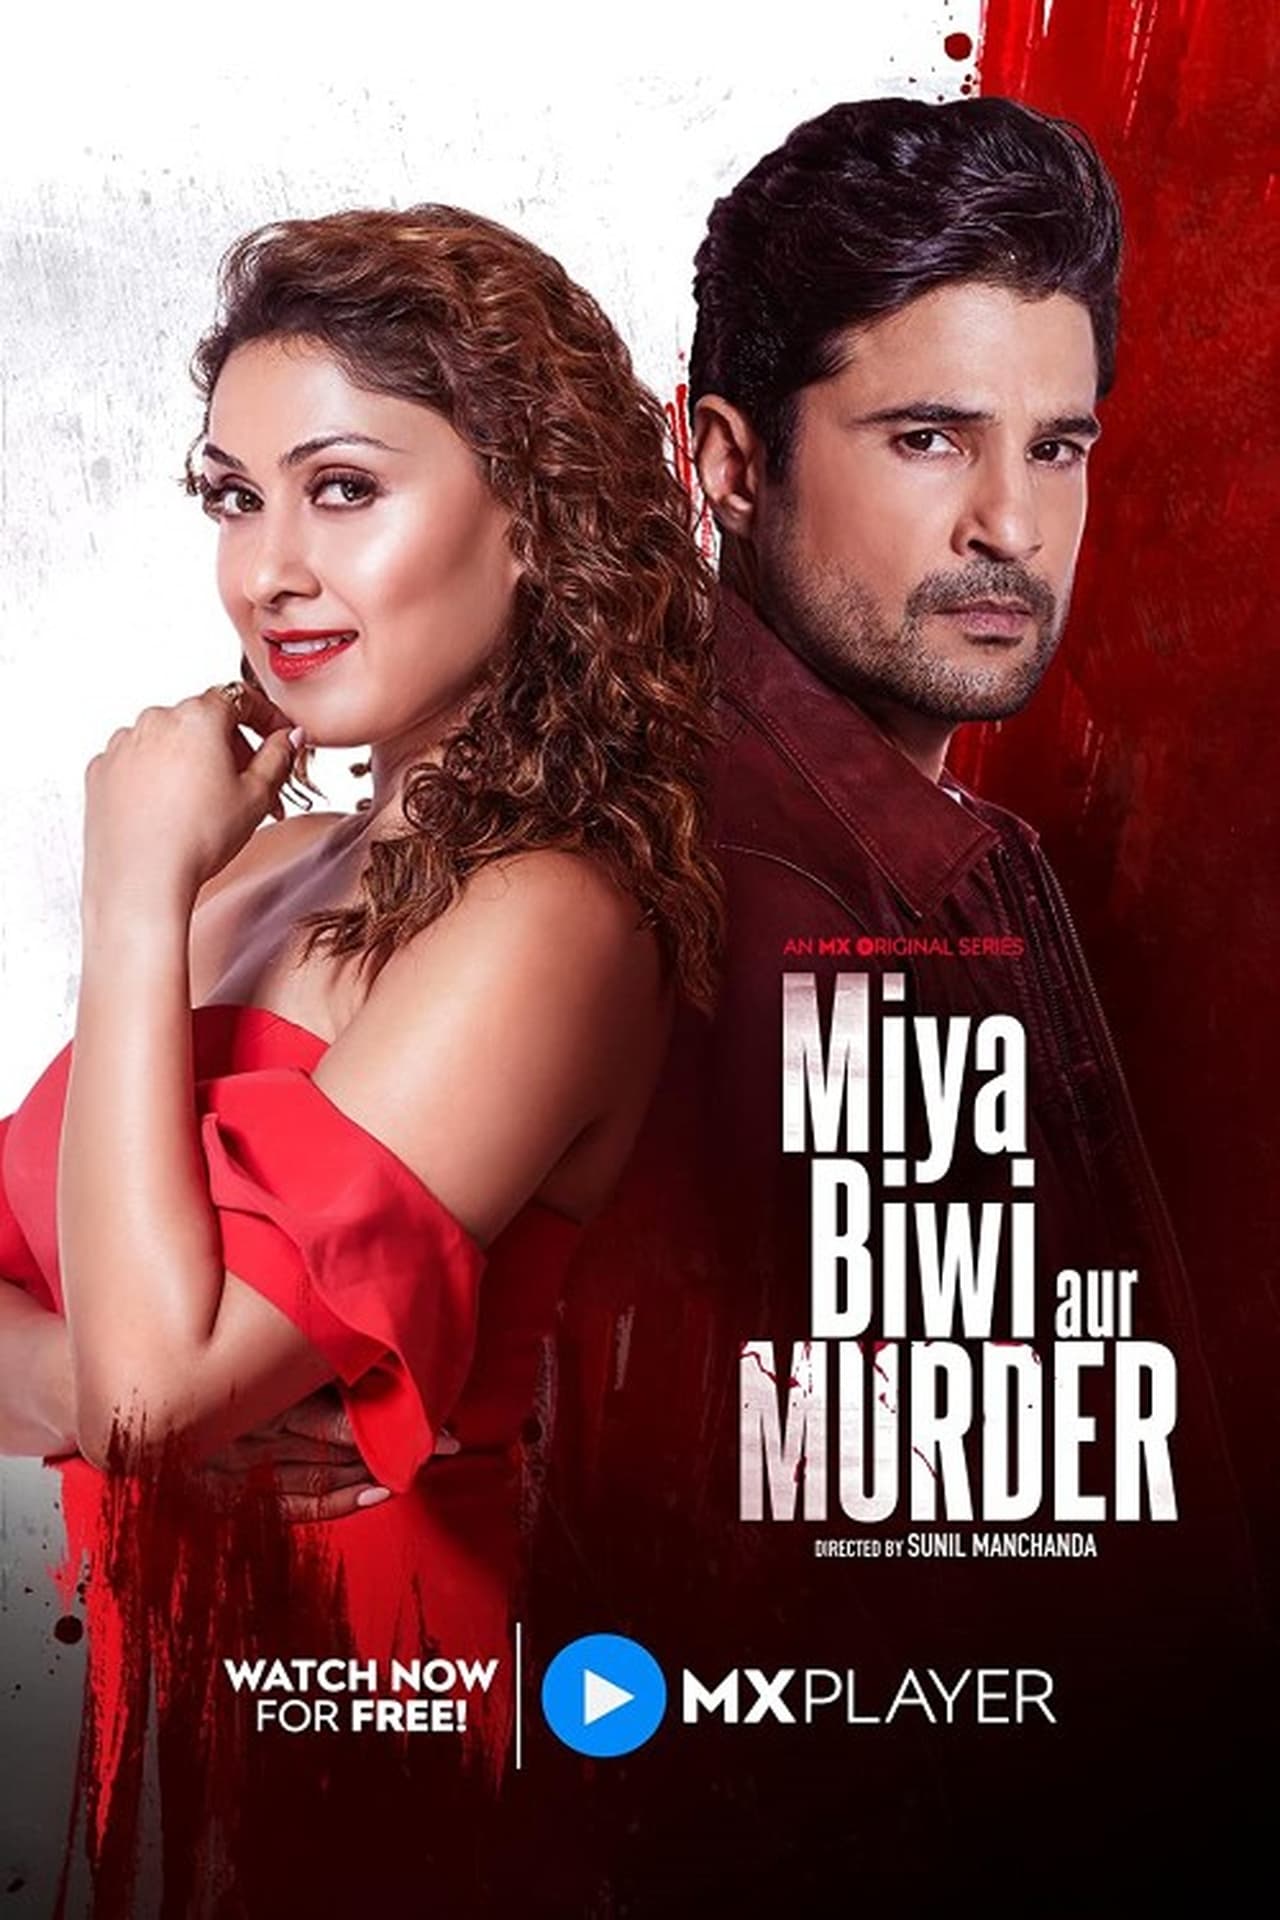 Miya Biwi Aur Murder cast actress name